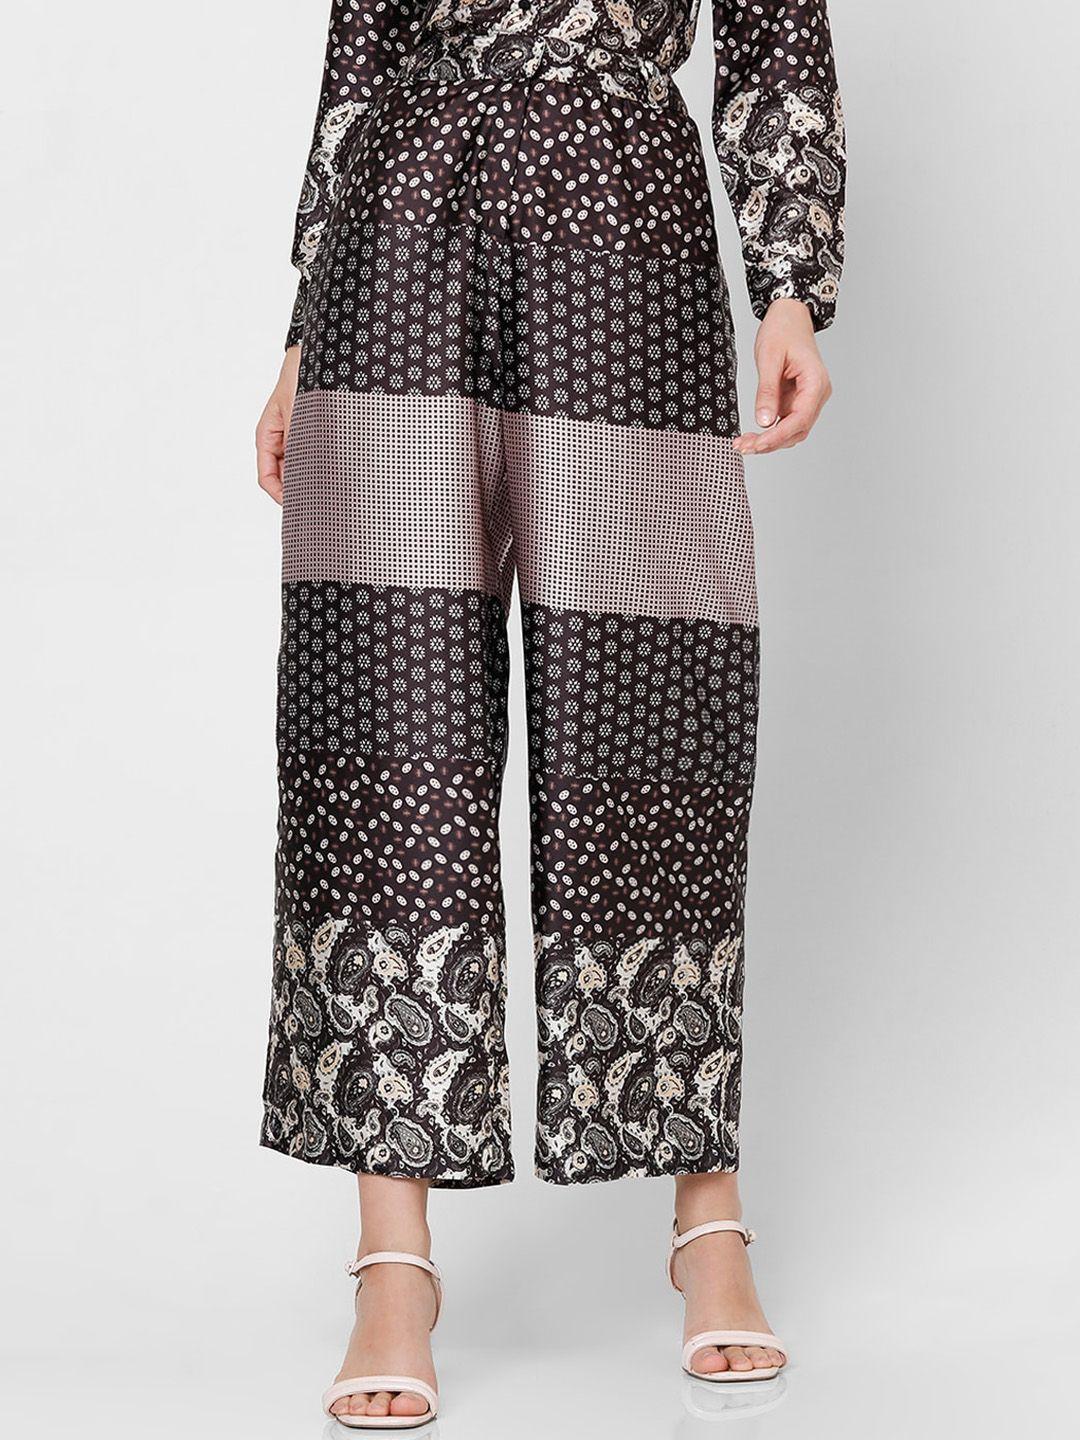 vero moda women geometric printed high-rise culottes trousers